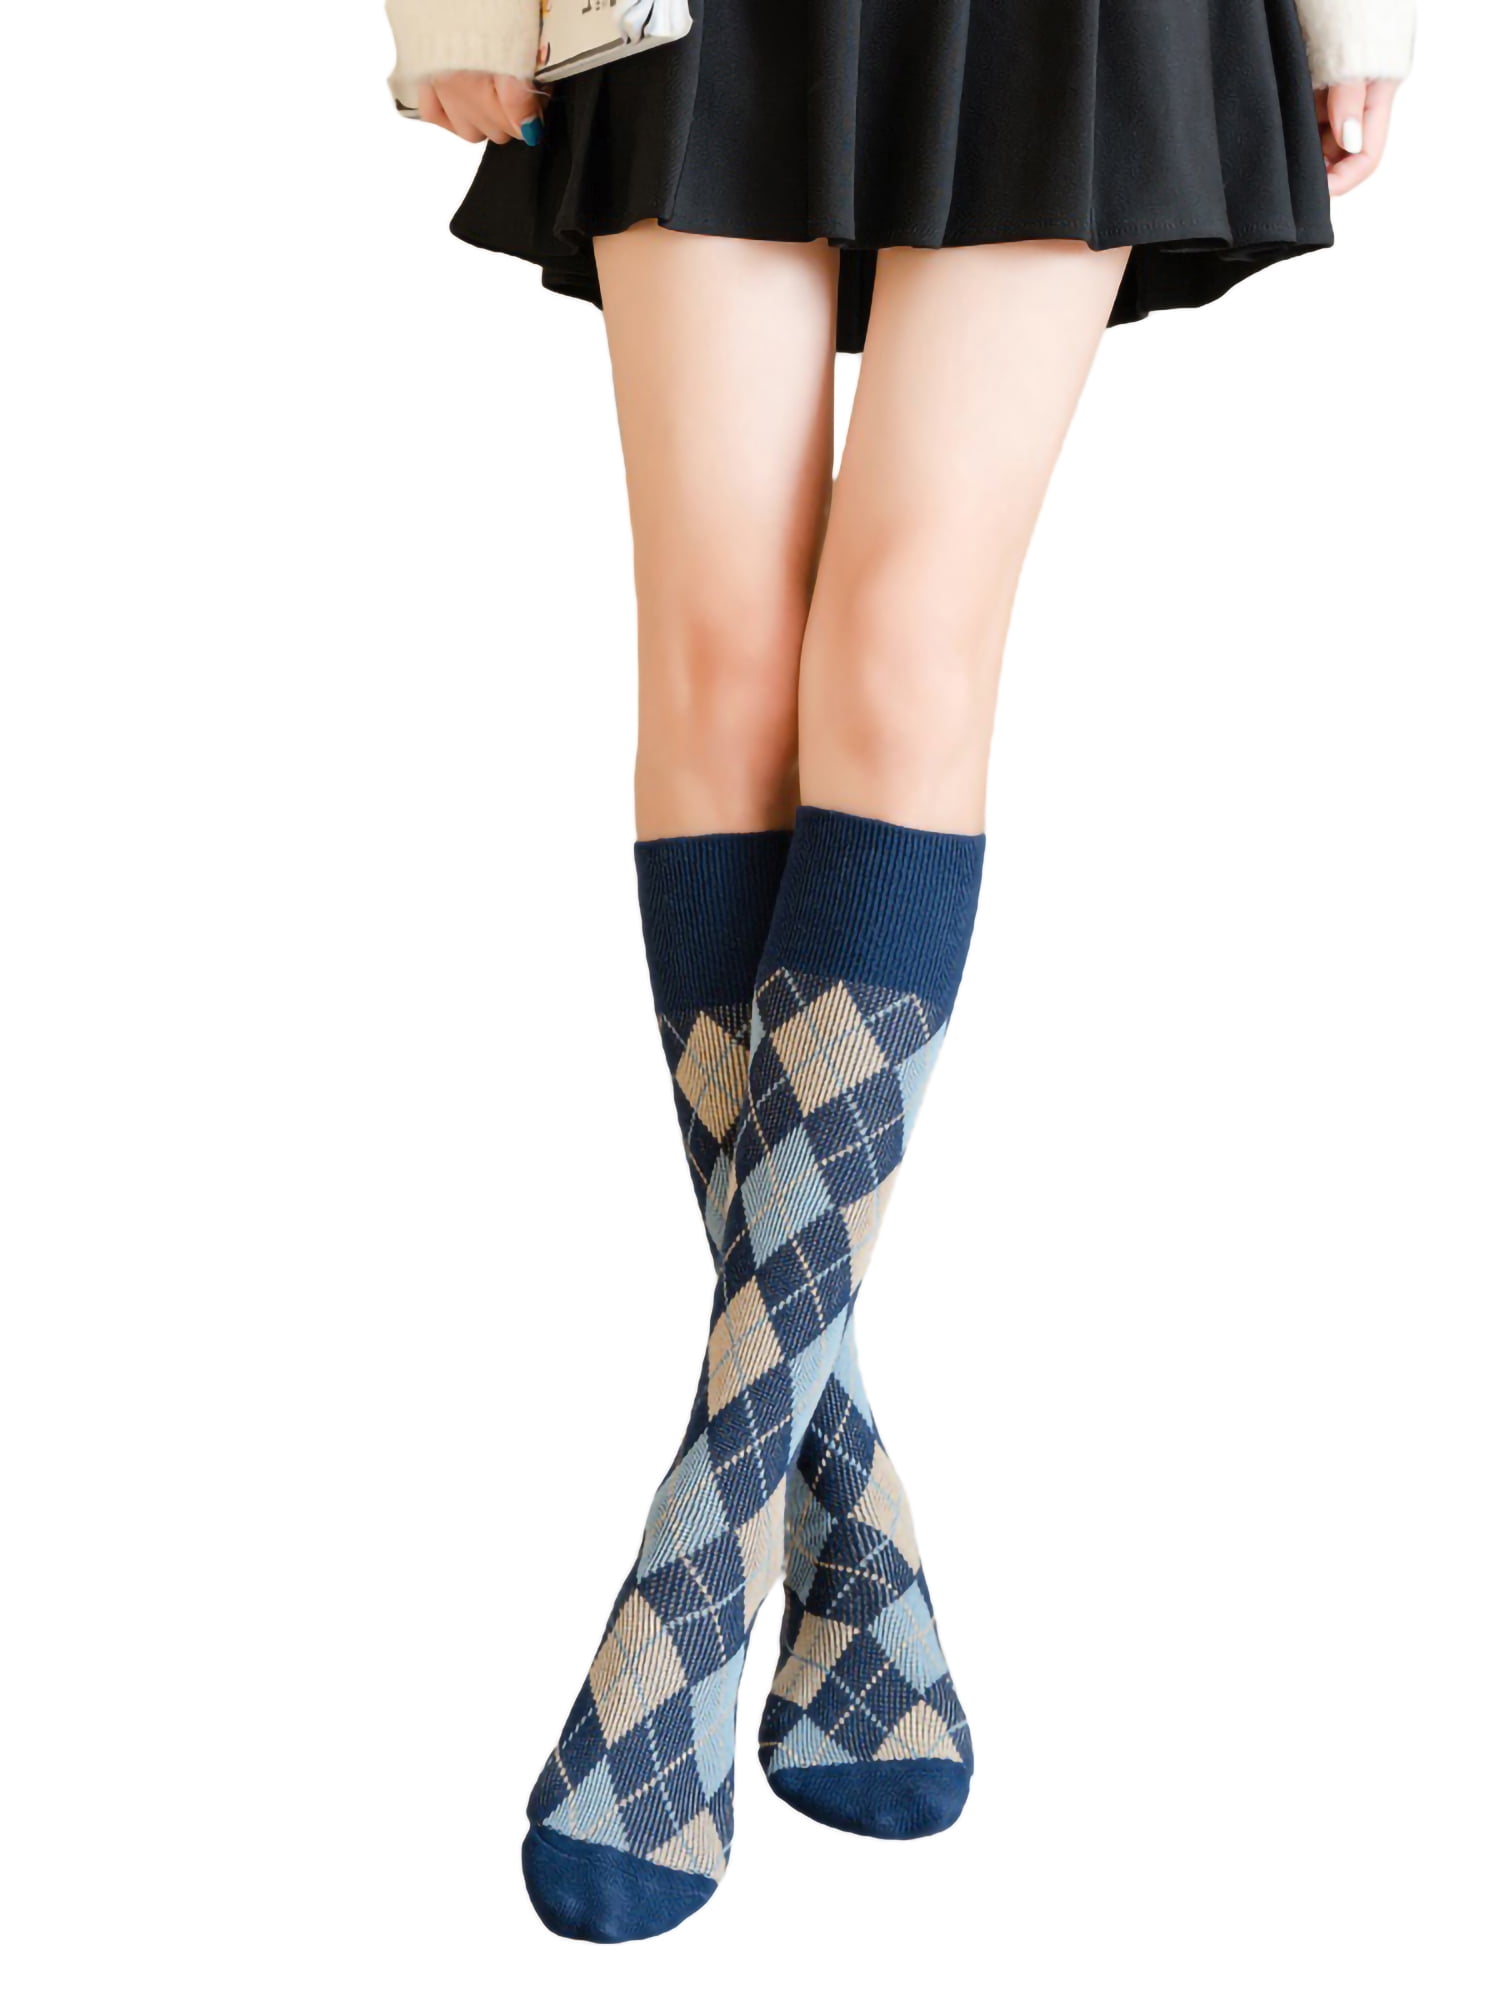 High Elasticity Girl Cotton Knee High Socks Uniform Dark Camouflage Women Tube Socks 